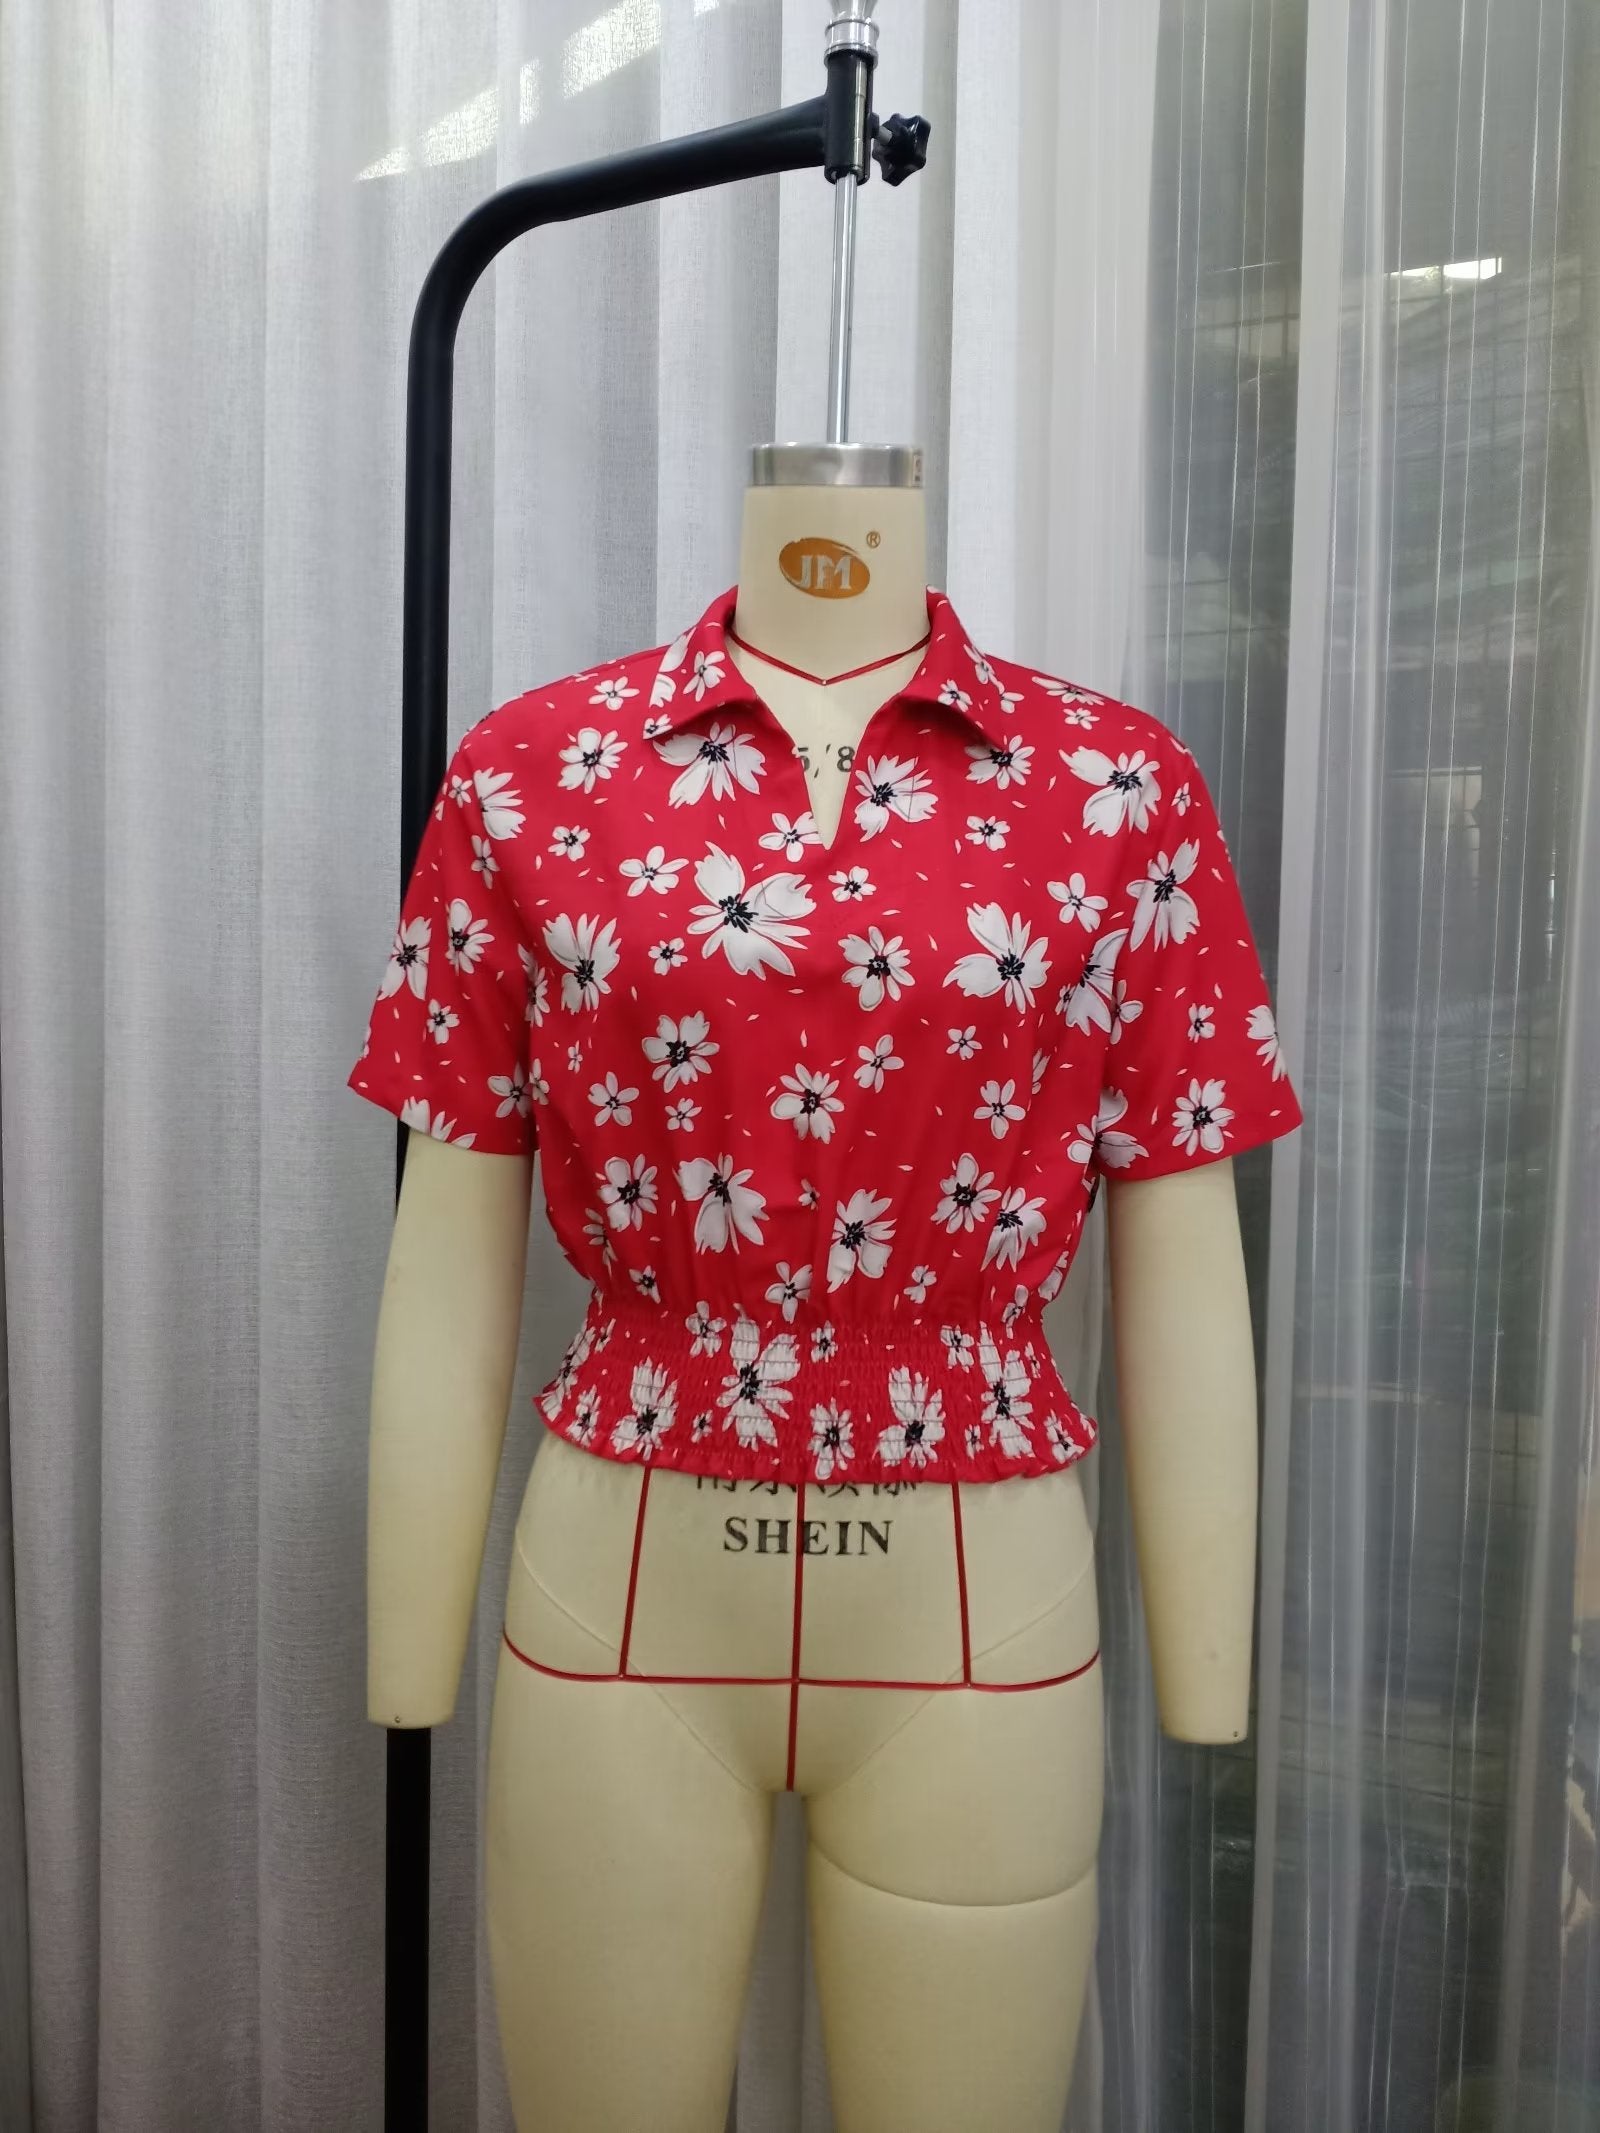 Southeast Asia Short Sleeved Shirt Women Summer Loose Printed Top Floral Shirt